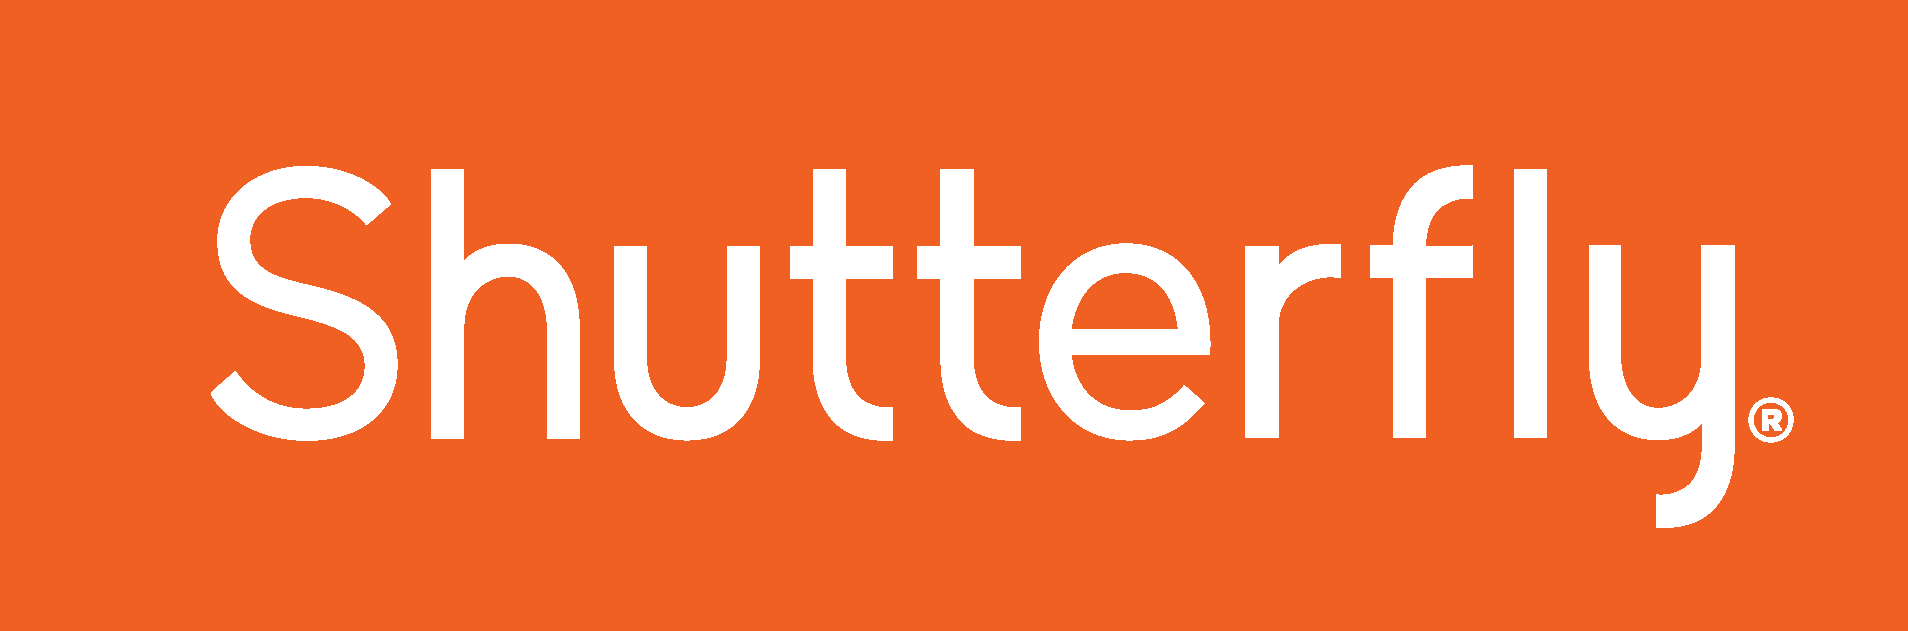 Shutterfly Logo Download Vector